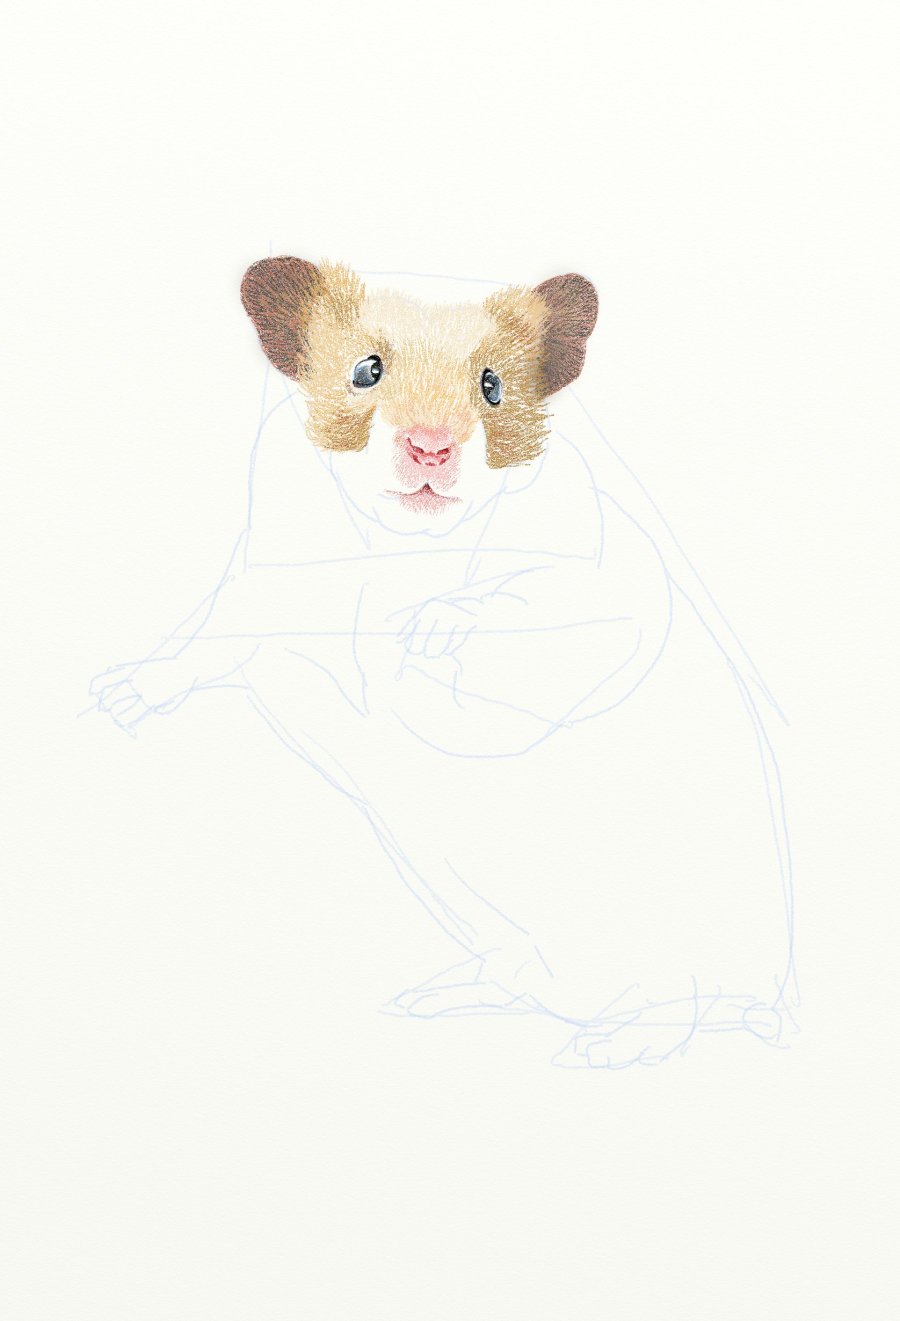 painter绘制一只可爱的小老鼠插画13